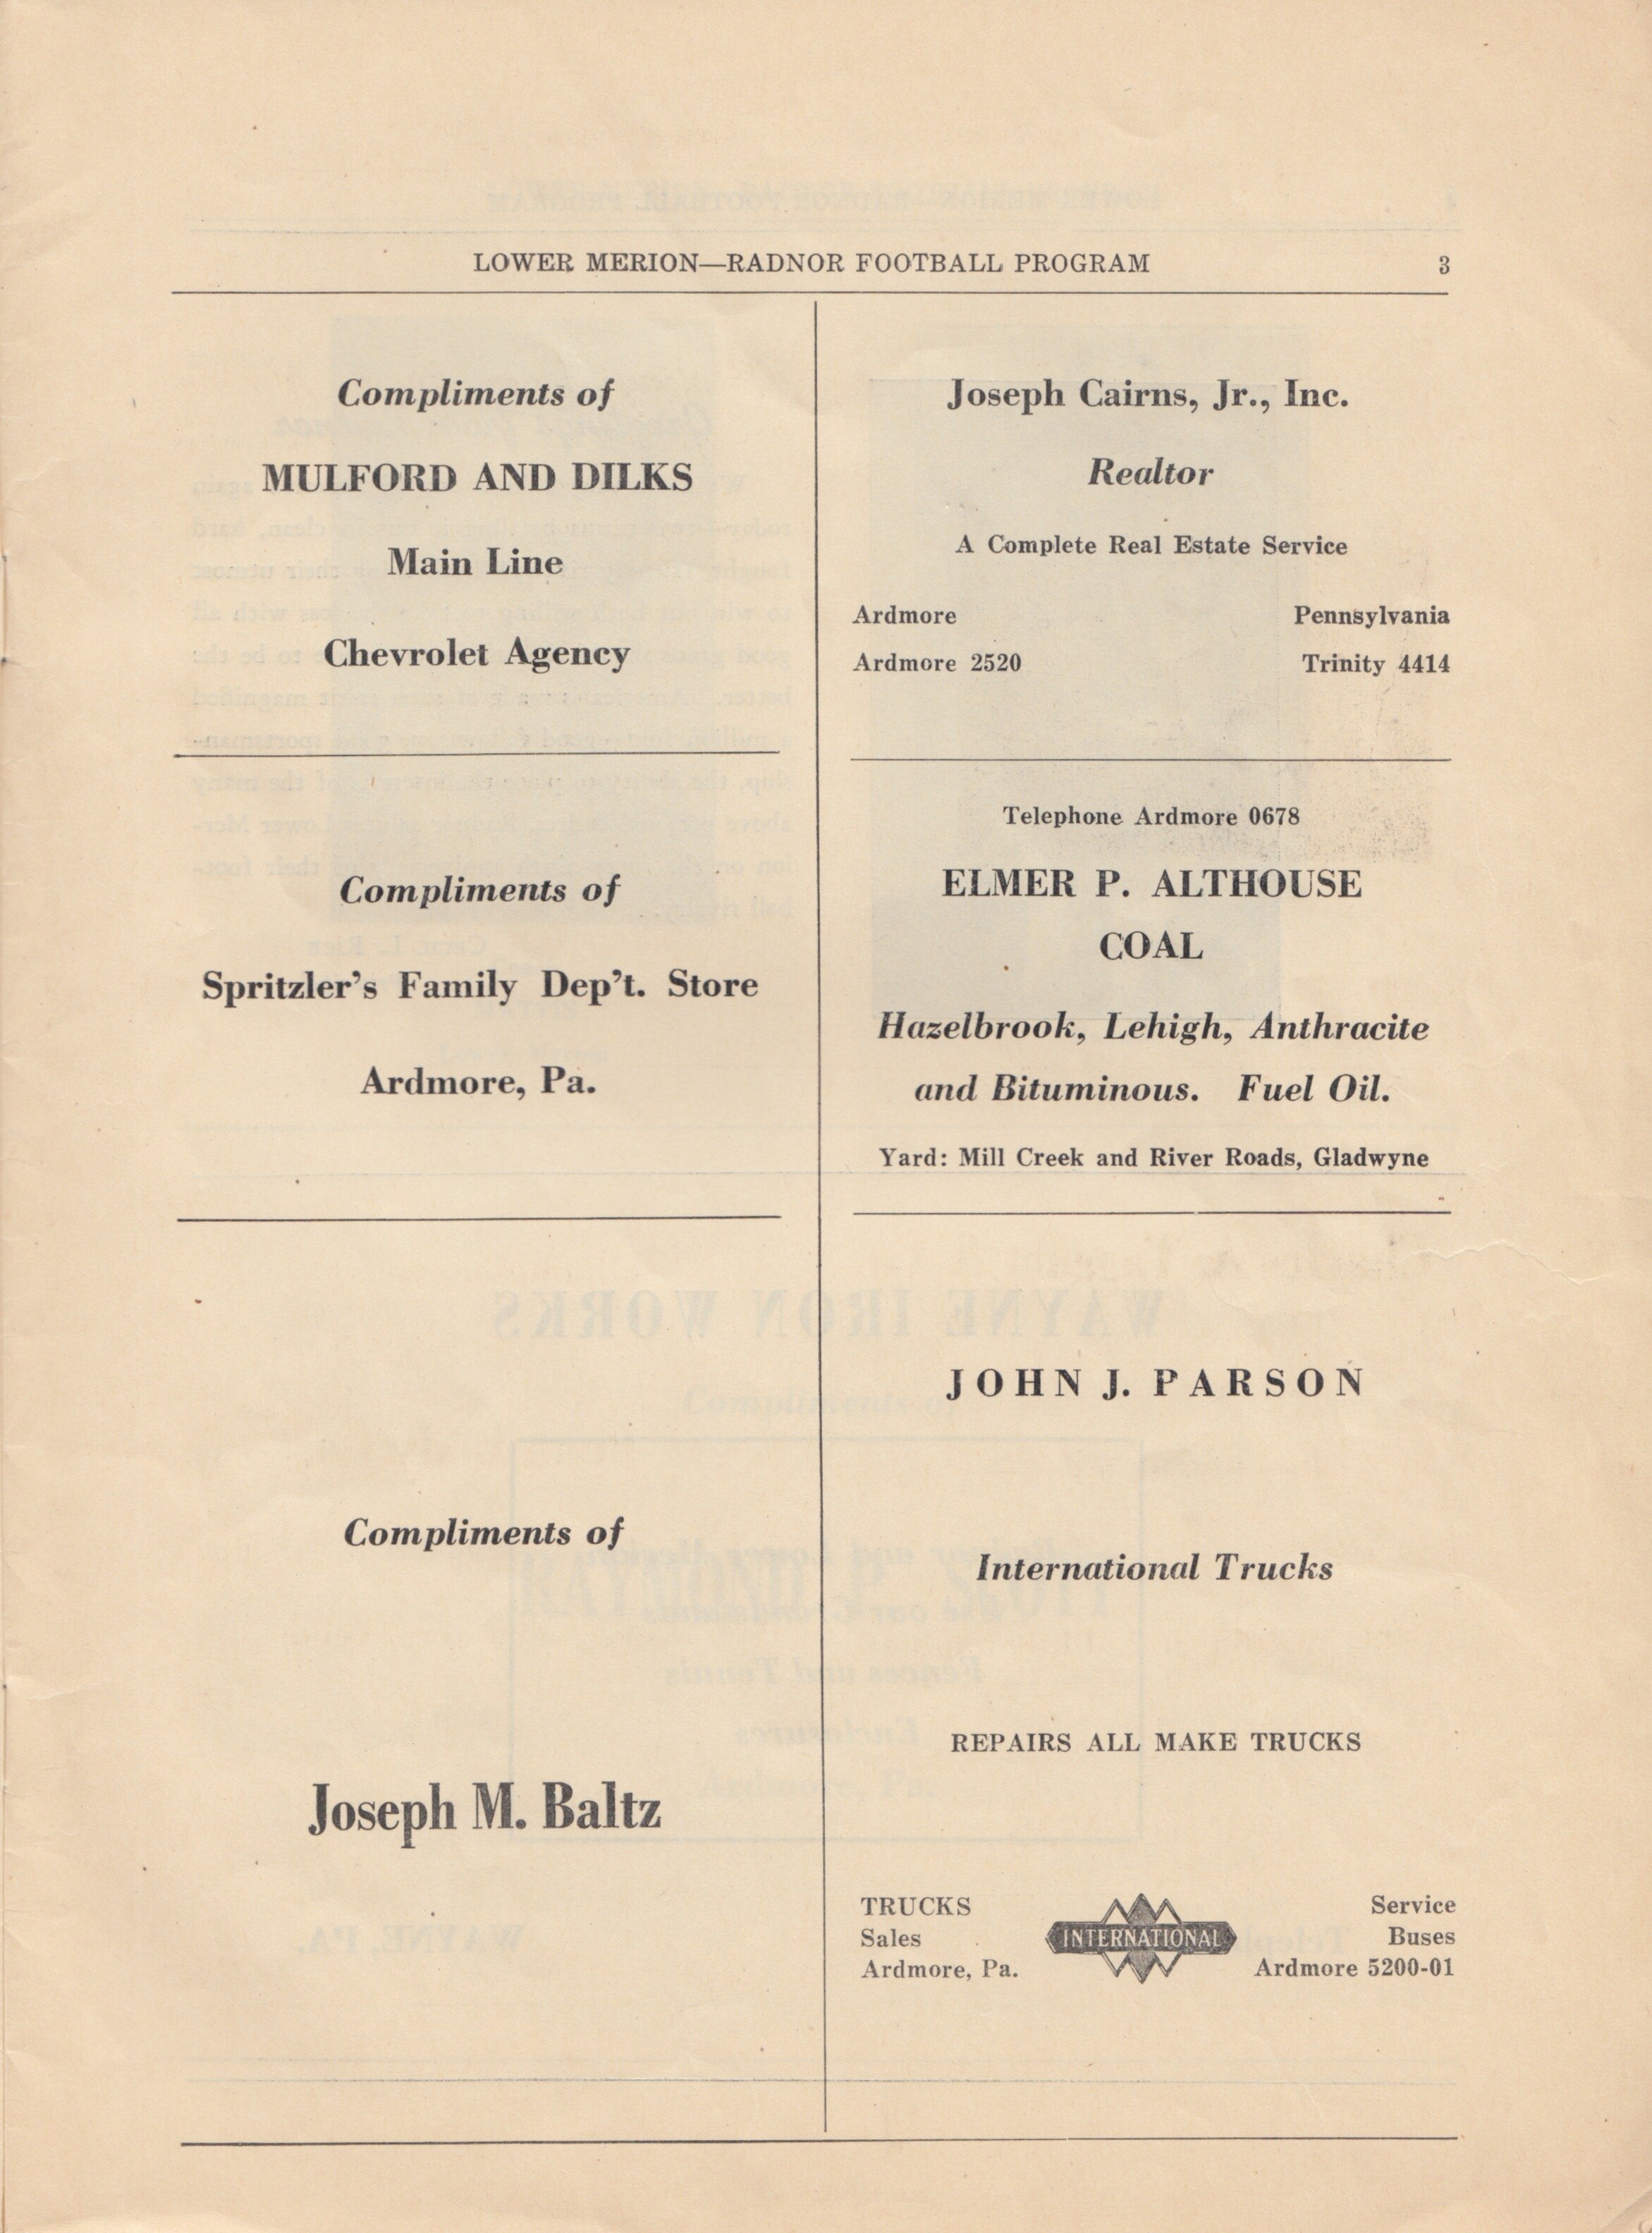 1945 Radnor v. LM Program RAA 4.jpeg